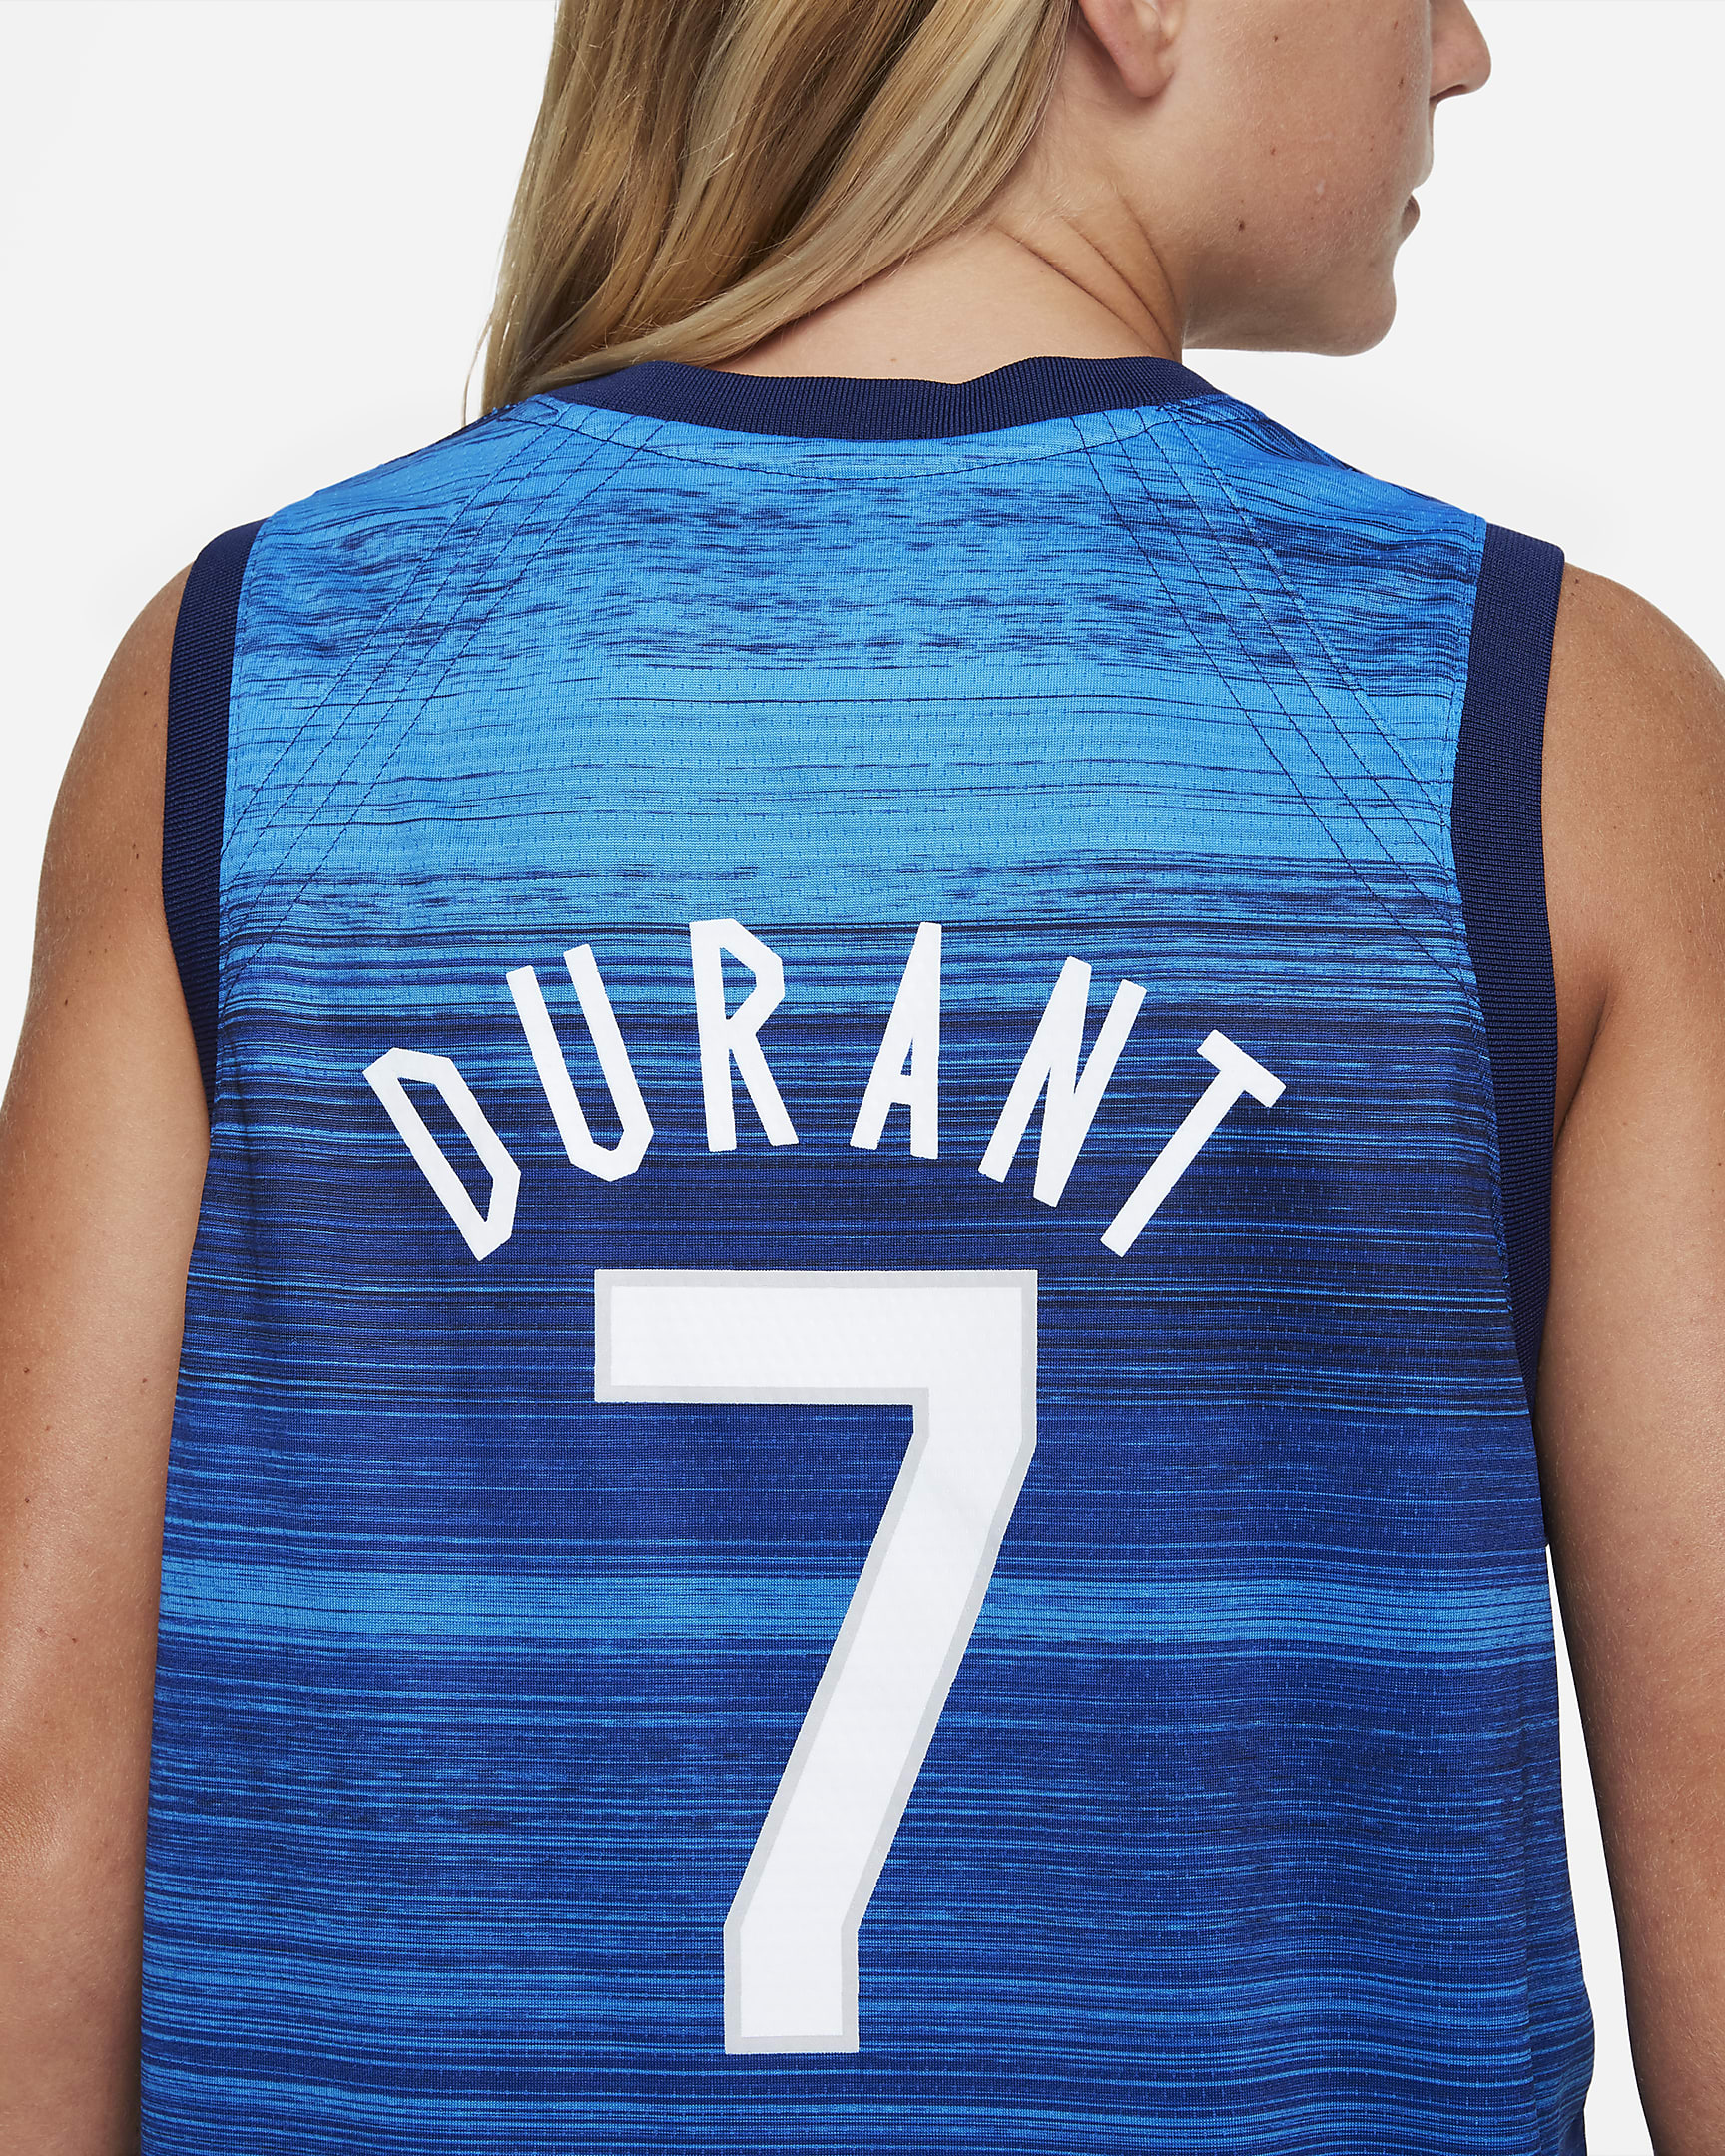 Nike Team USA (Kevin Durant) (Home) Older Kids' Nike Basketball Jersey